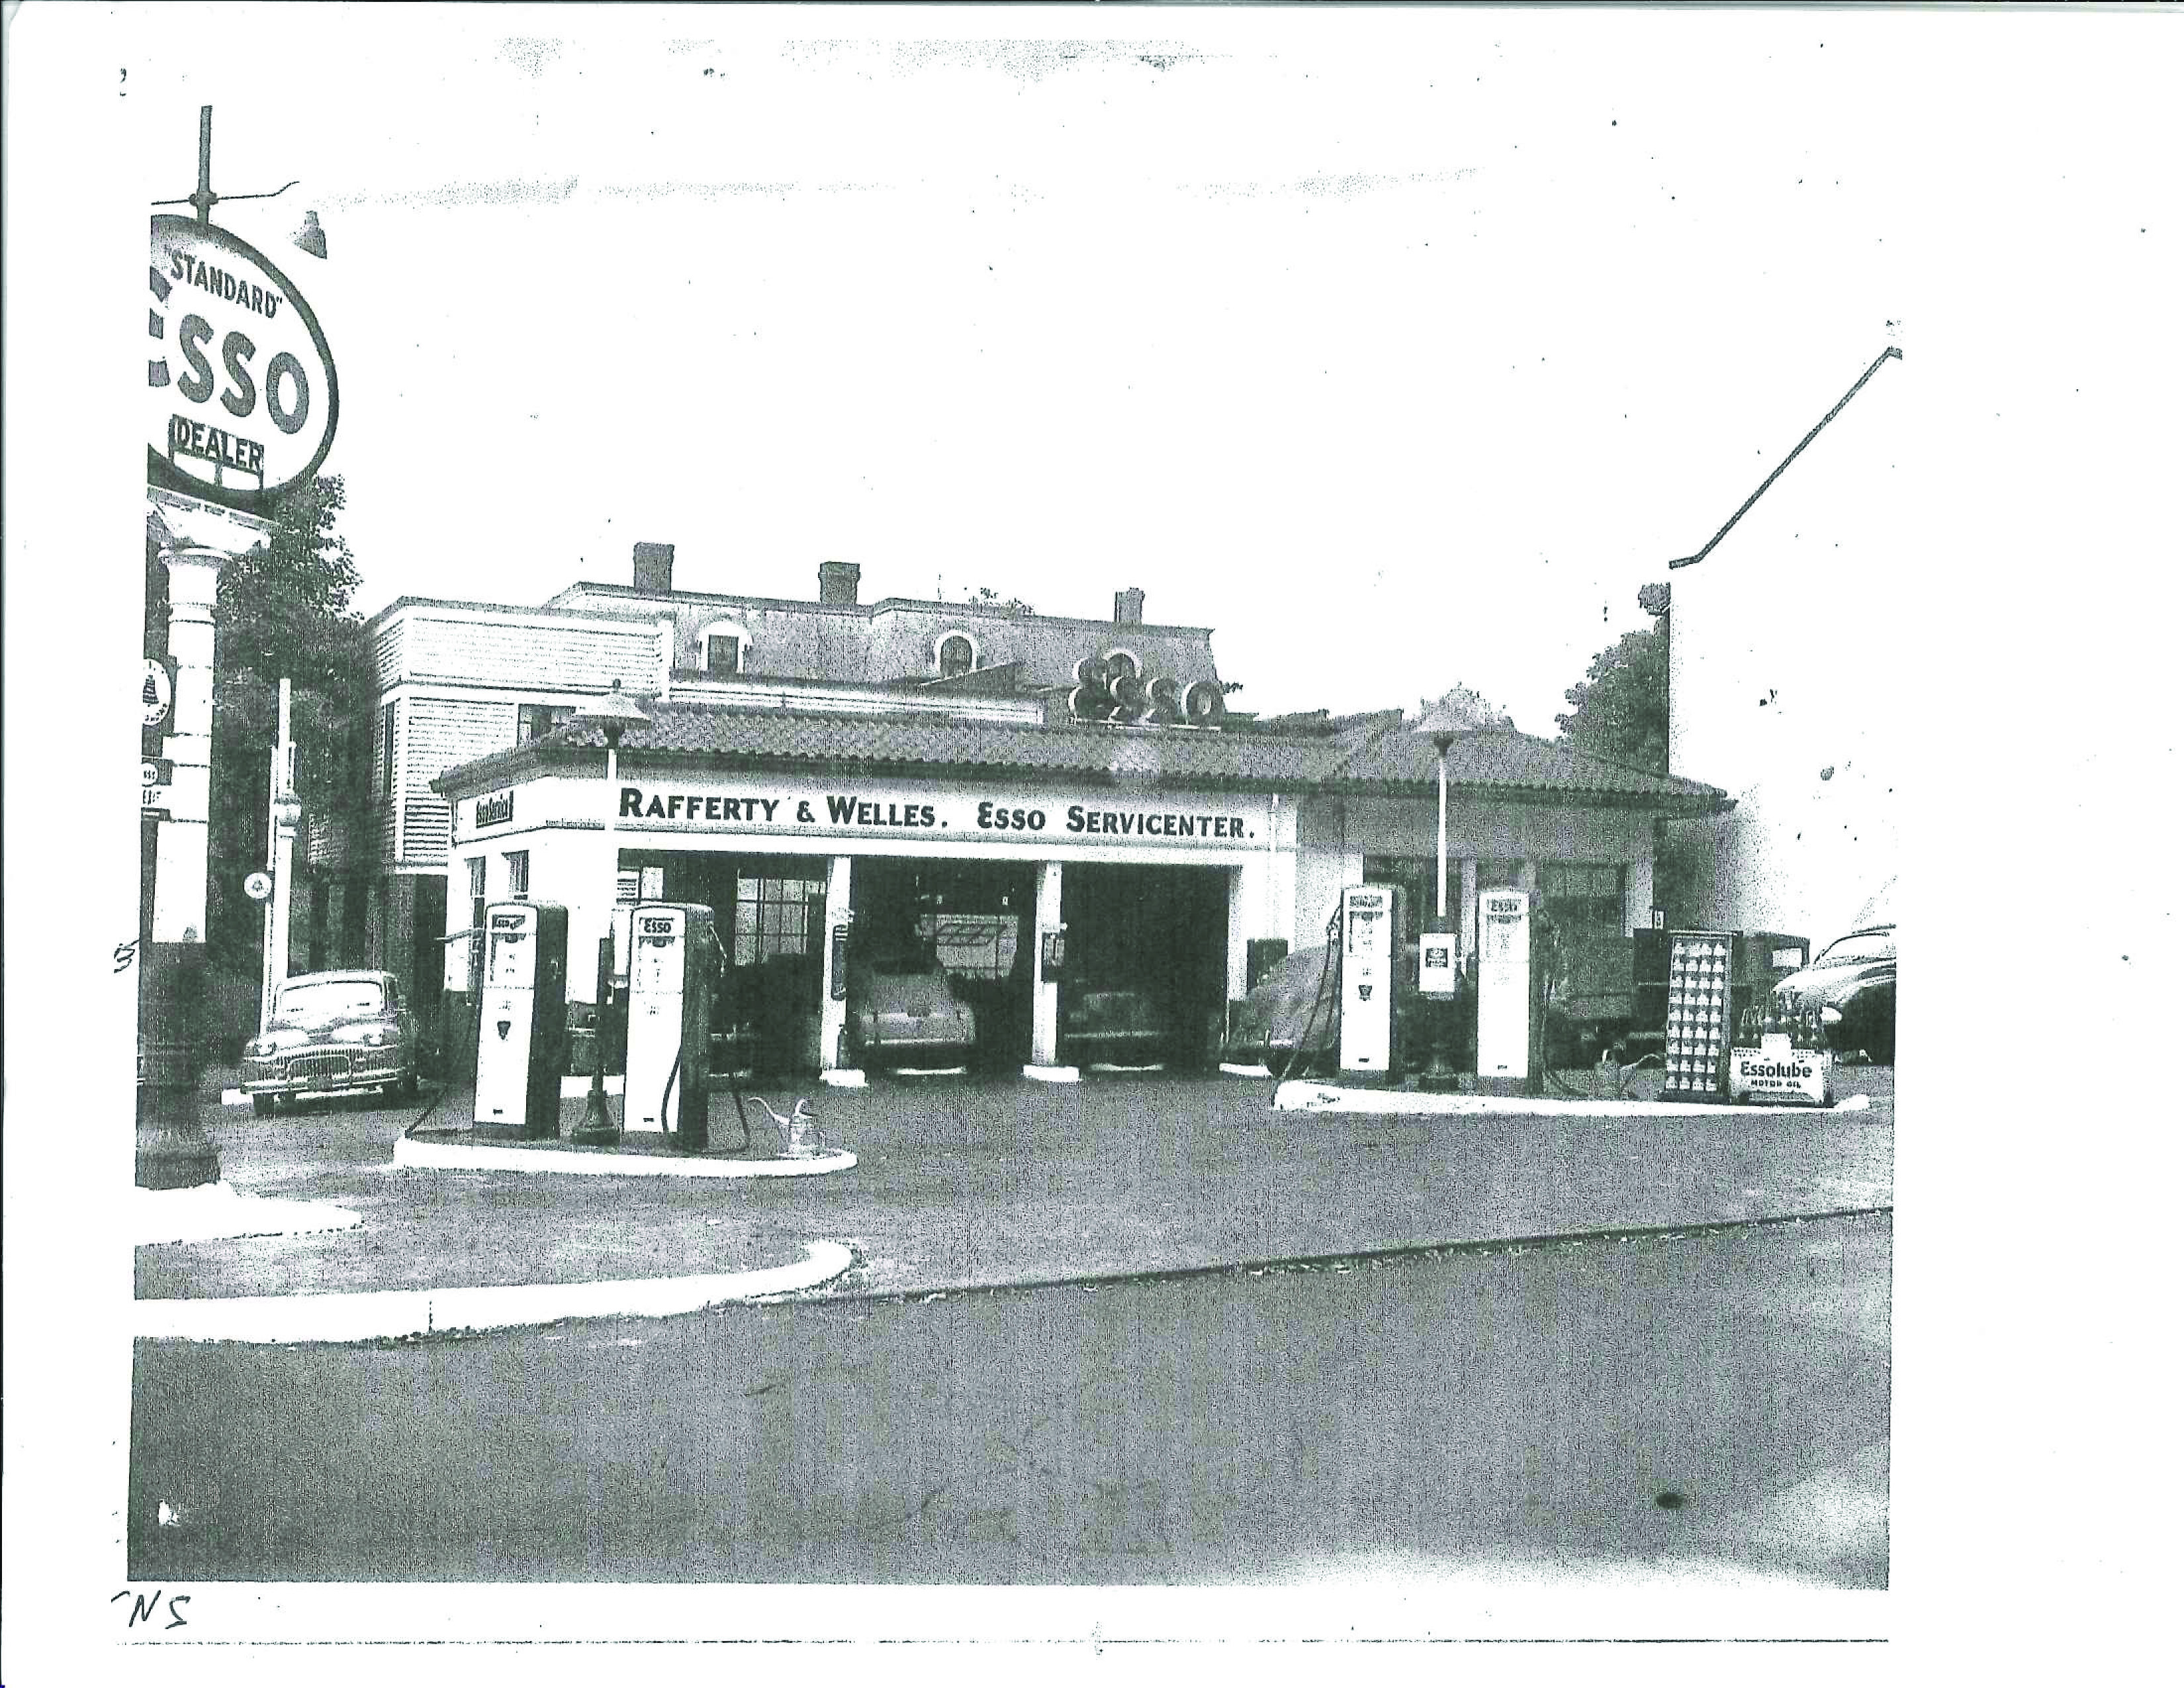 Rafferty & Welles, Ted Rafferty's gas station.